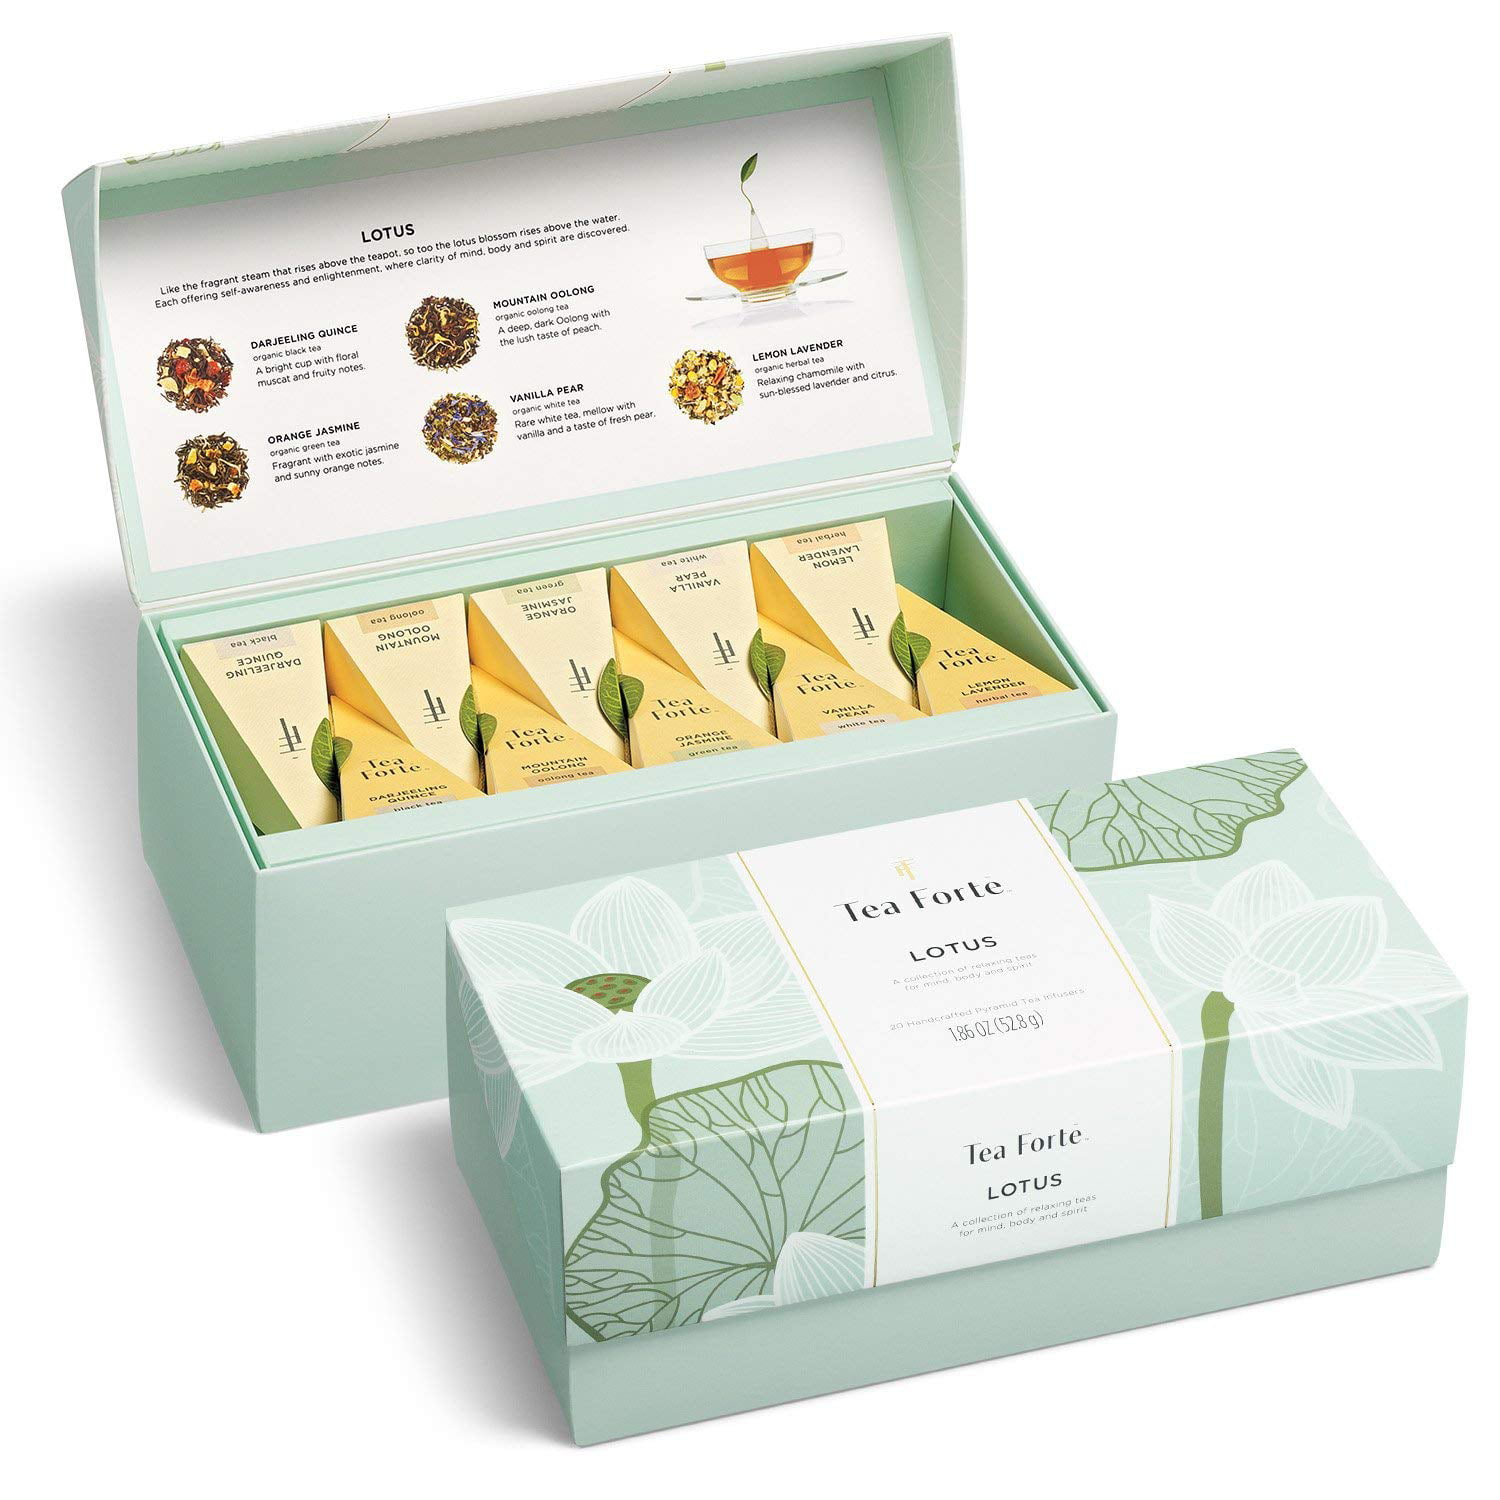 Tea Forte Lotus Relaxing Teas Presentation Box Tea Sampler Gift Set, 20